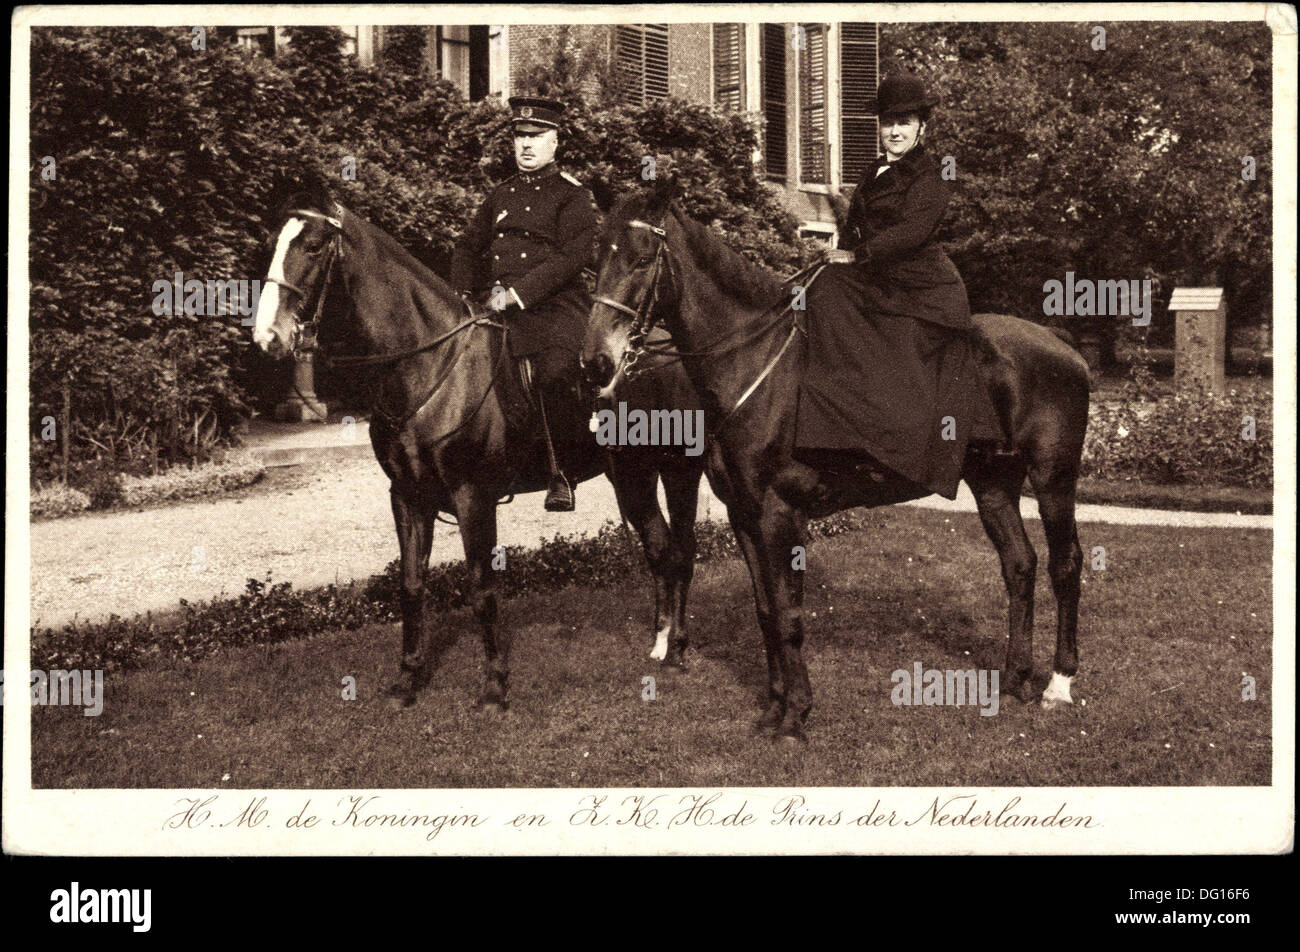 AK H.M de Koningin de Z.K.H. de Rins der Nederlanden, Pferdesport; Stockfoto